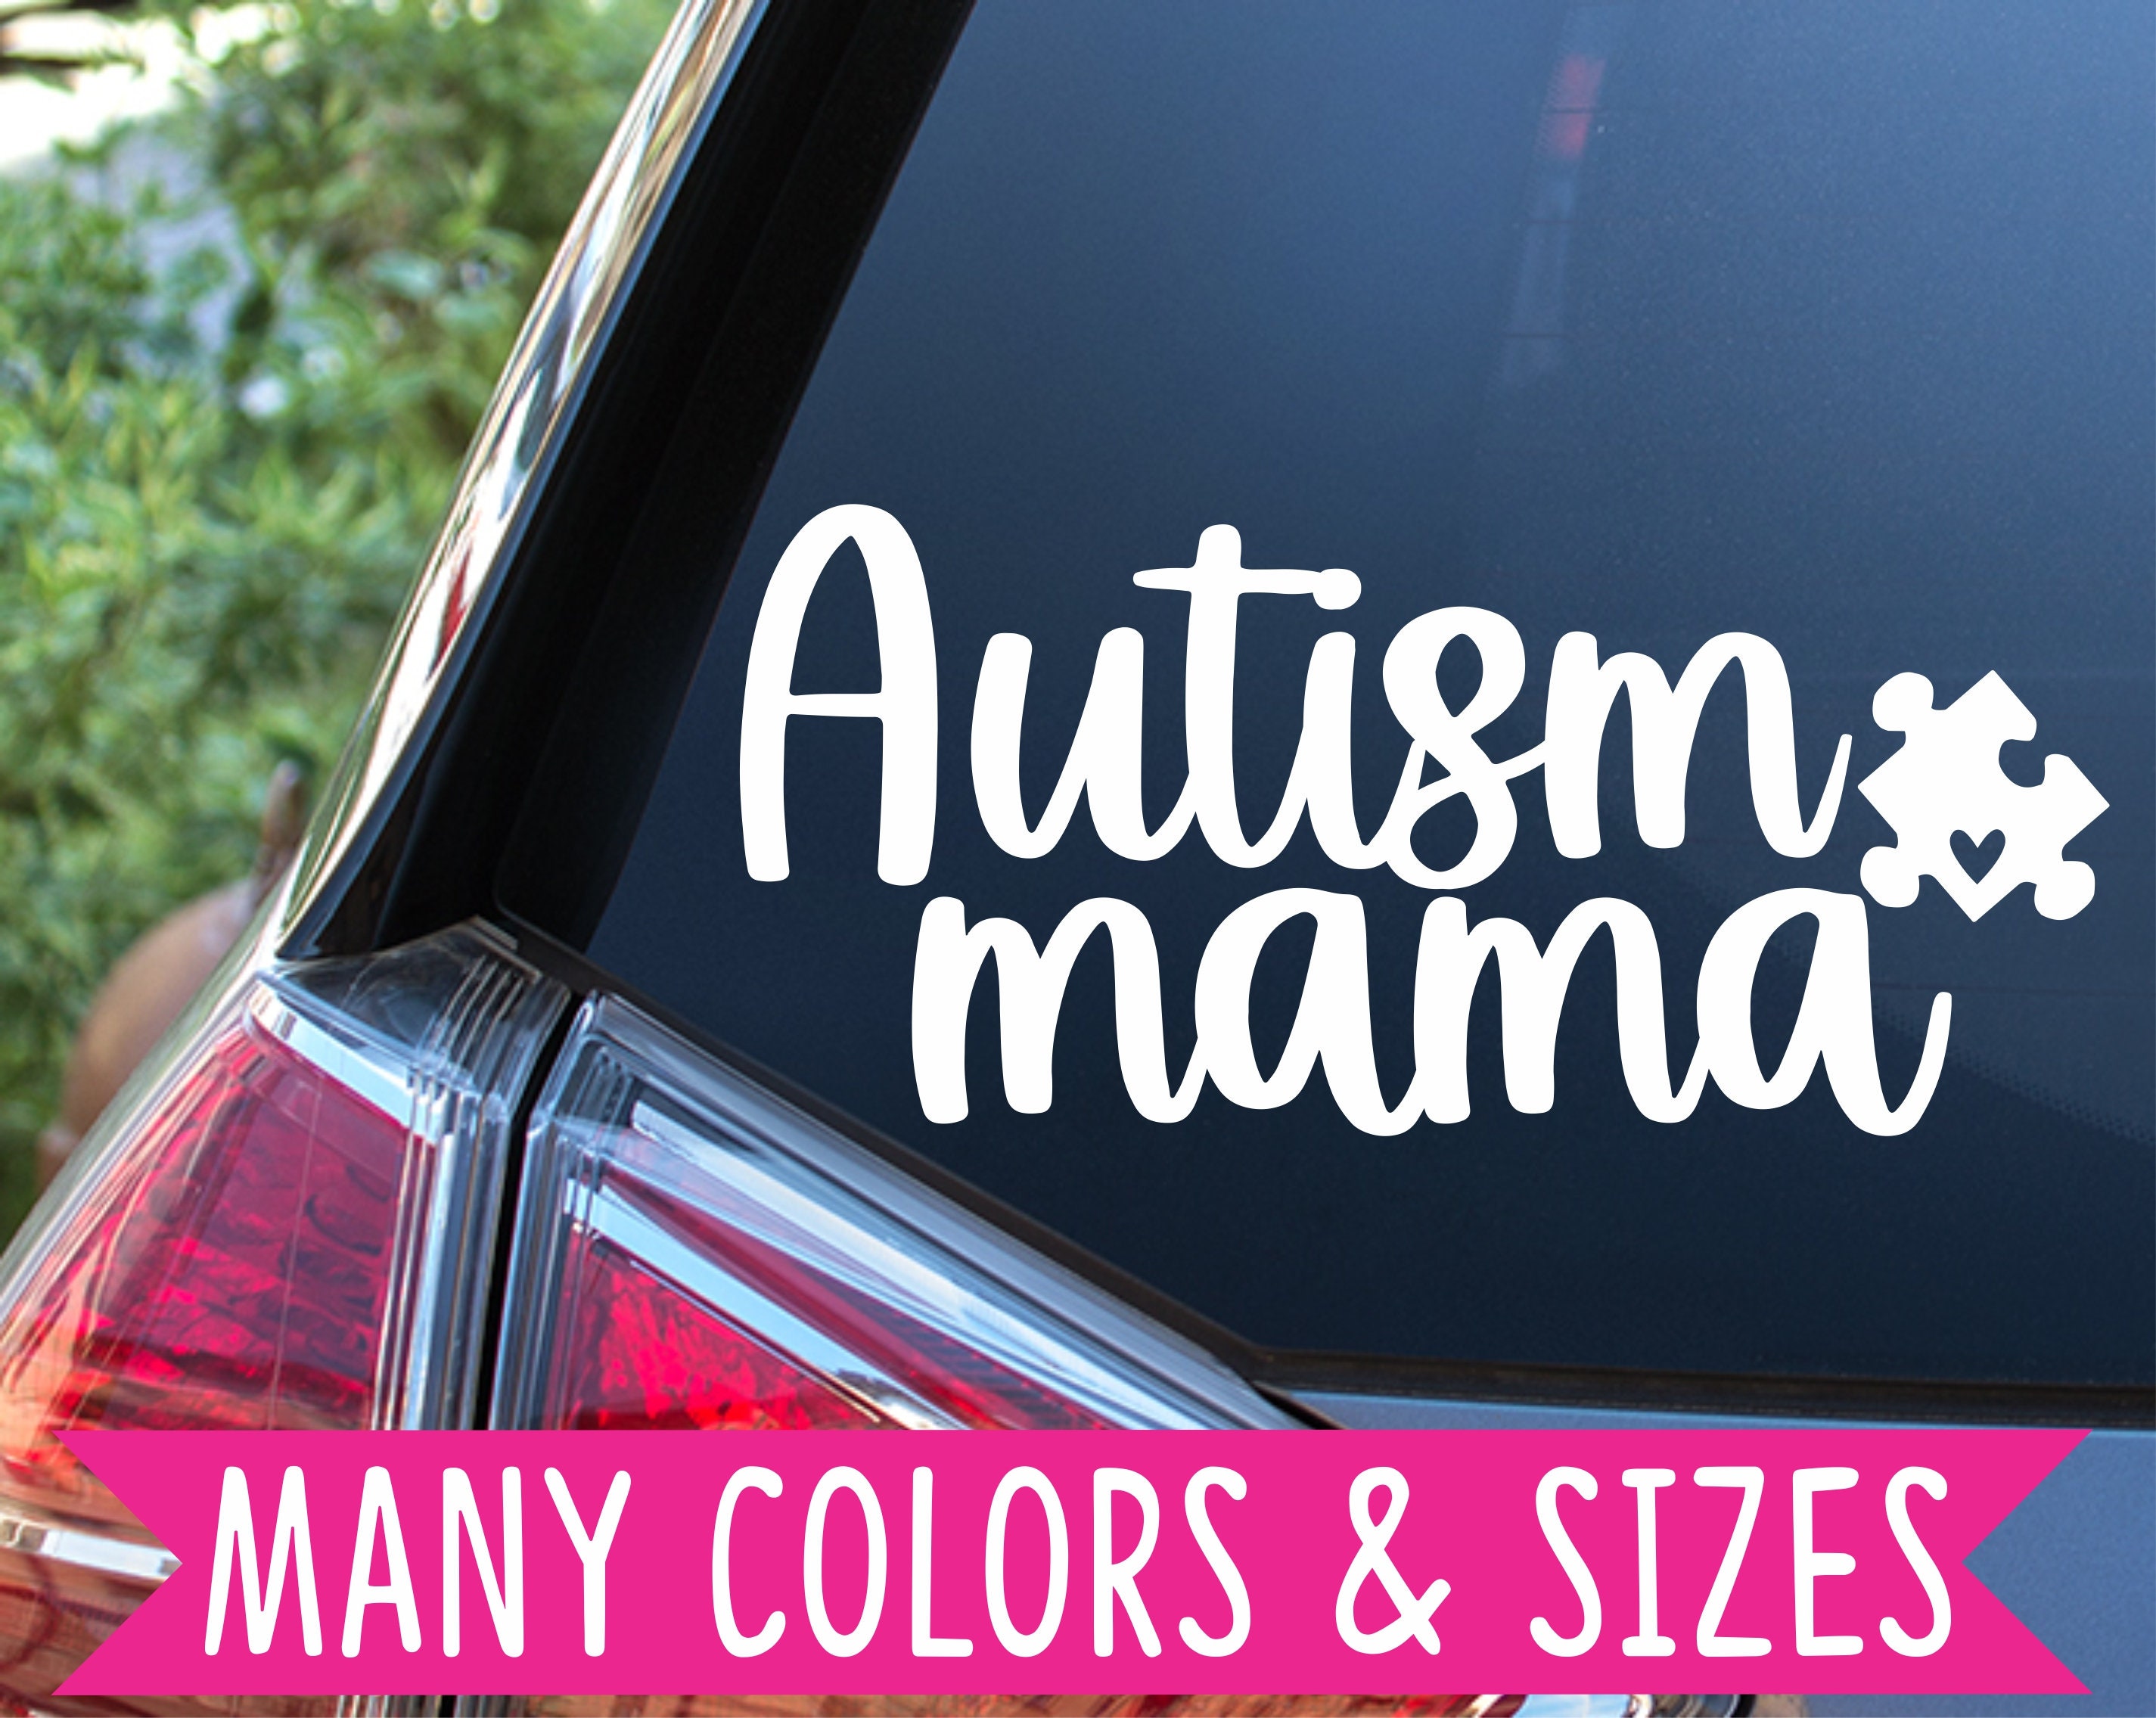 10 DOLLAR DONATION Autism Awareness Sticker for Car Window 